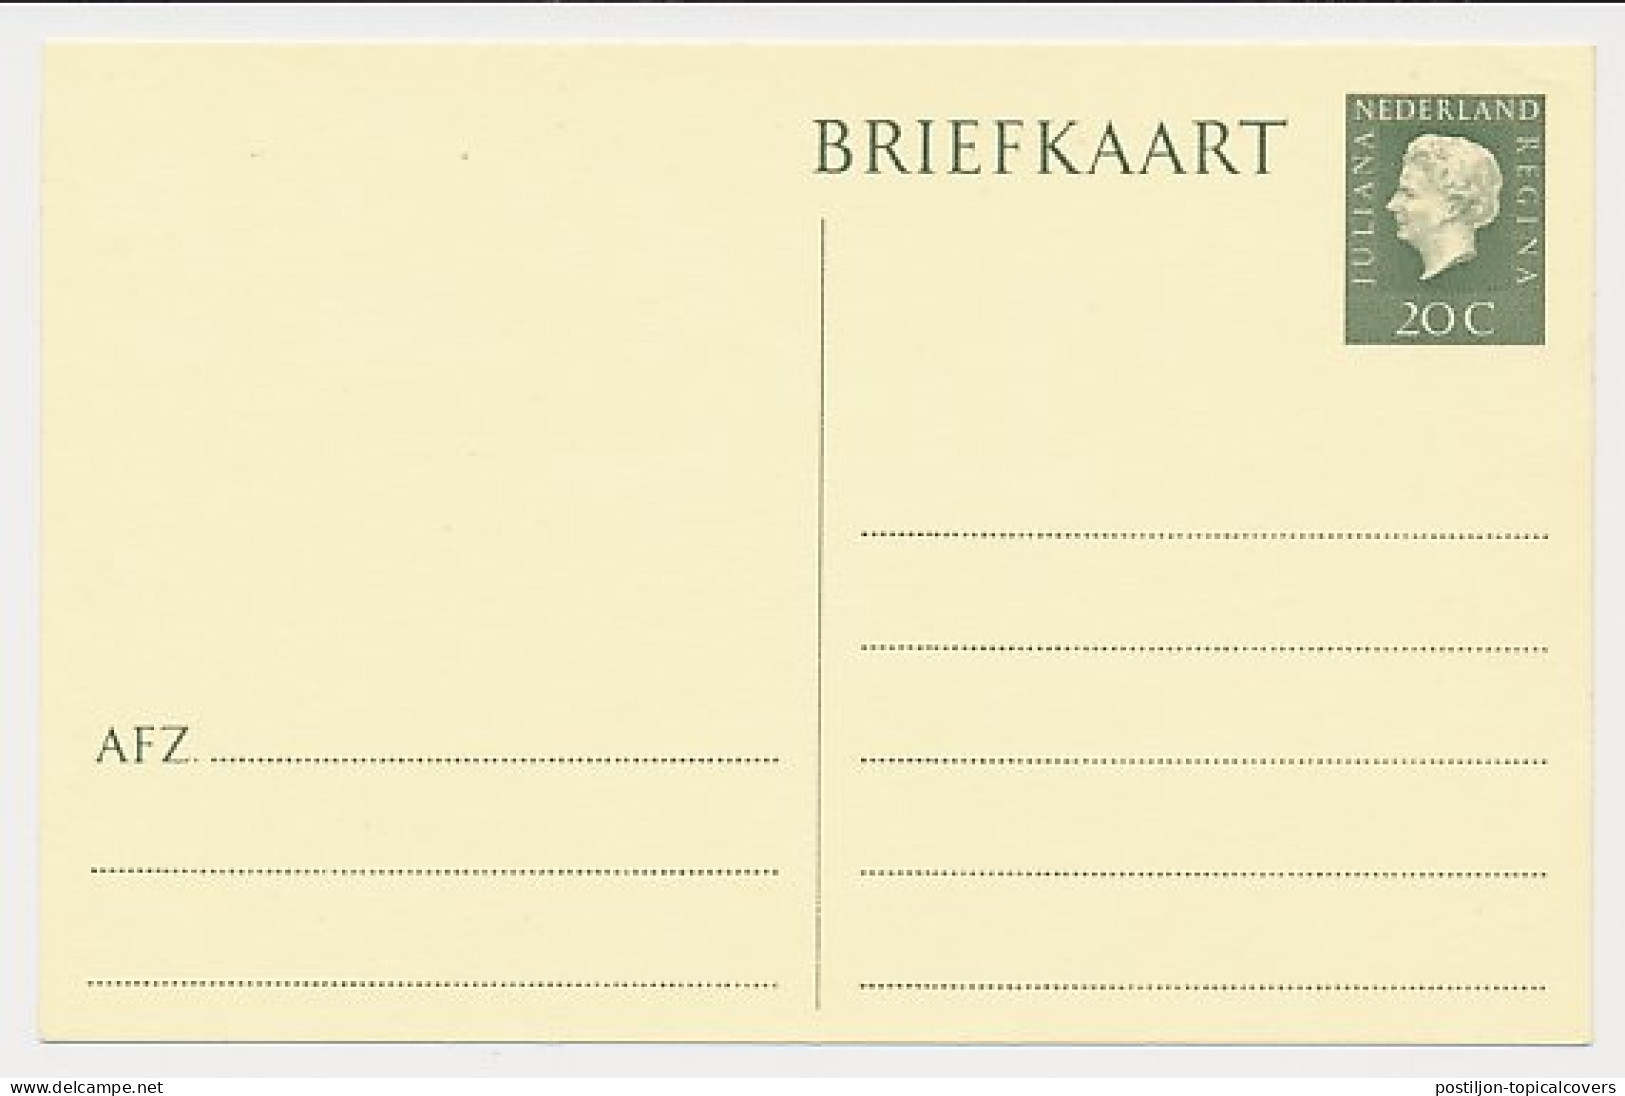 Briefkaart G. 342 - Postal Stationery